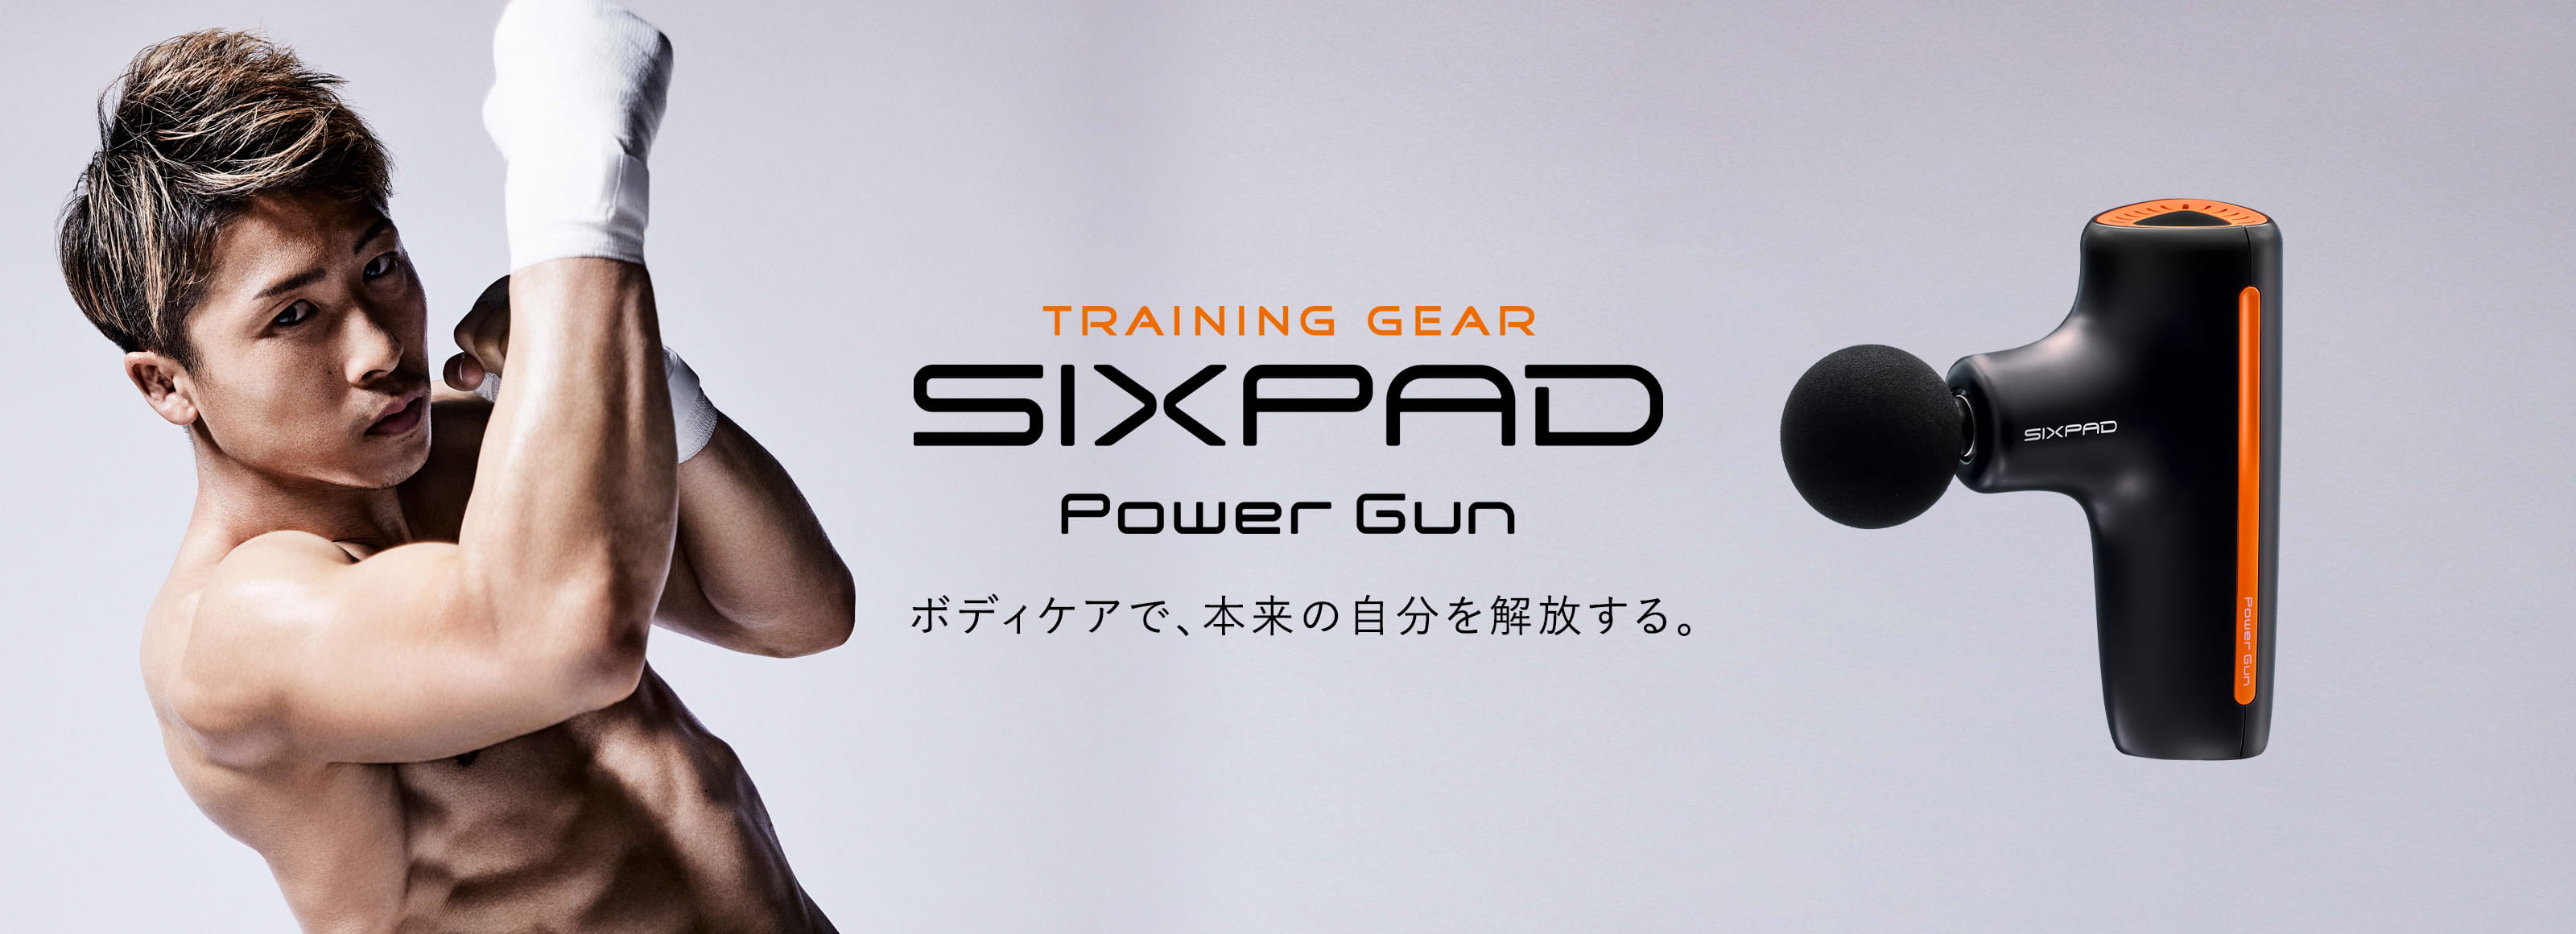 SIXPAD Powergun